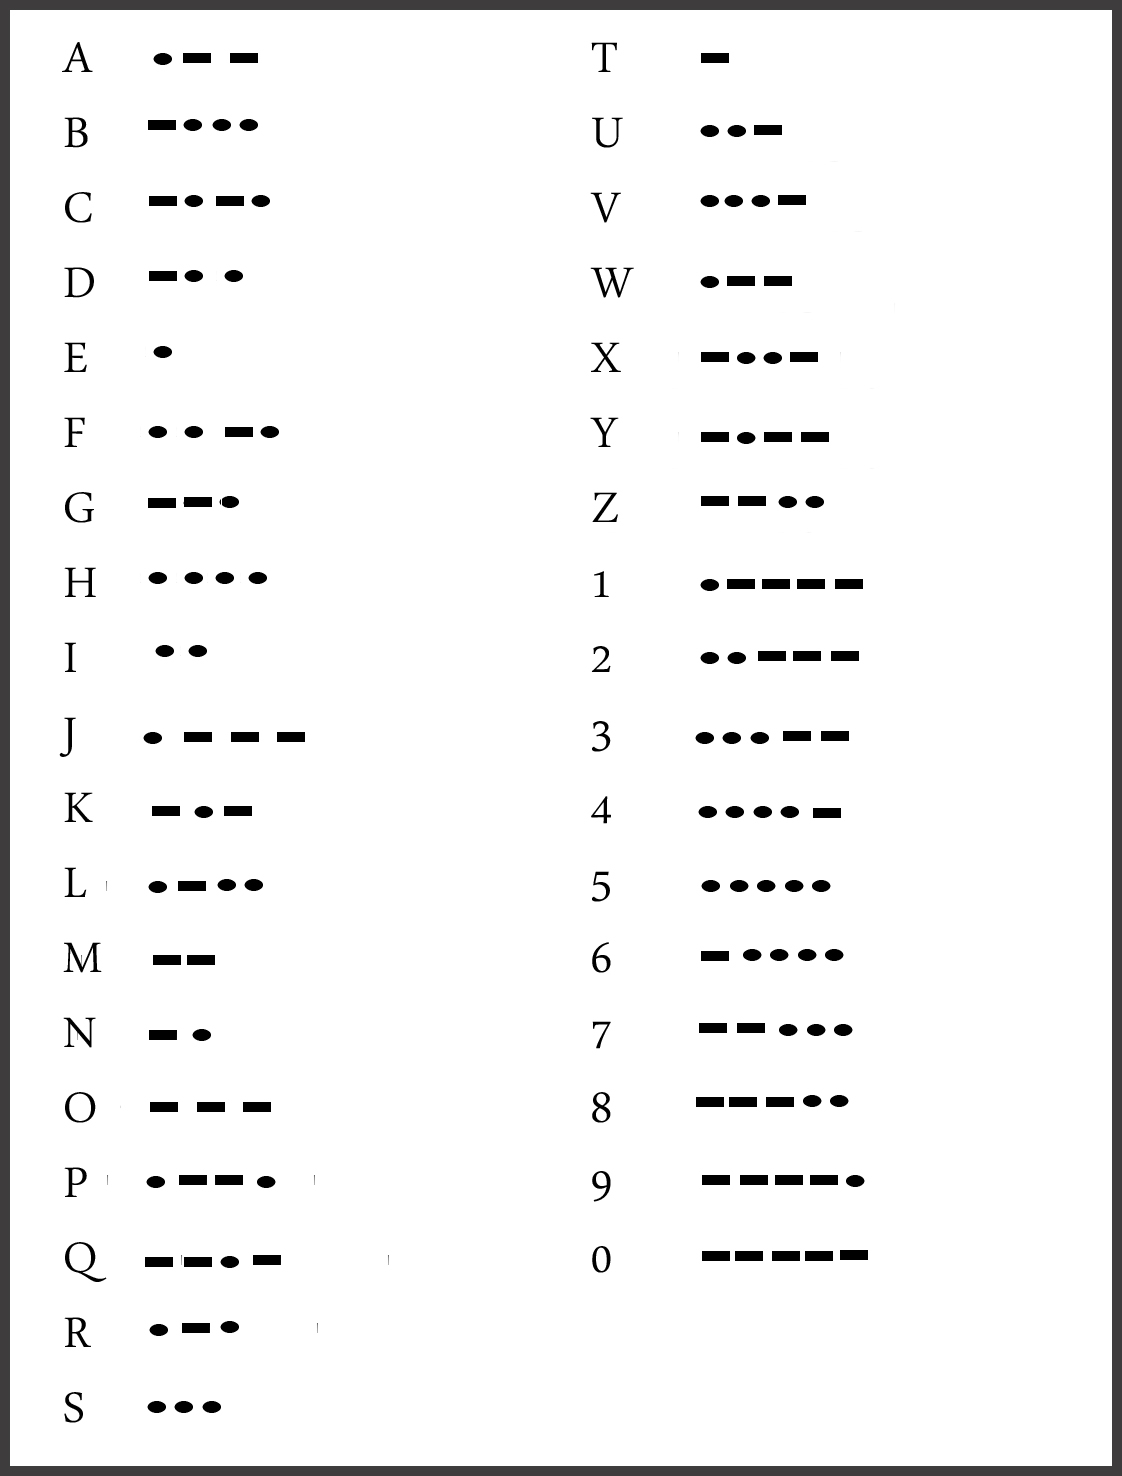 12 Best Images of Printable Morse Code Worksheet - Morse Code Worksheet ...